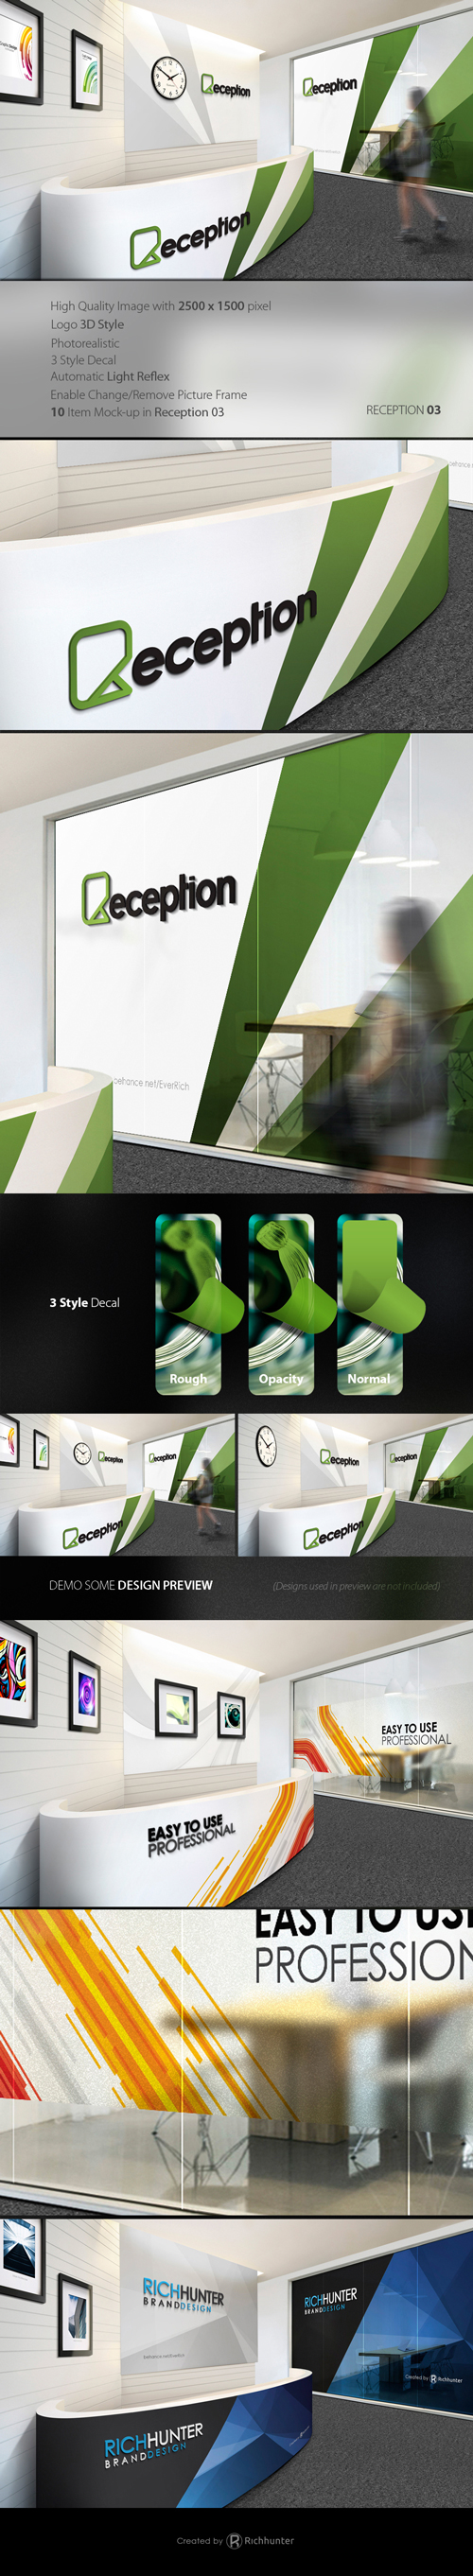 Mockup mock up office room psd file reception room logo 3d realistic presentation professional